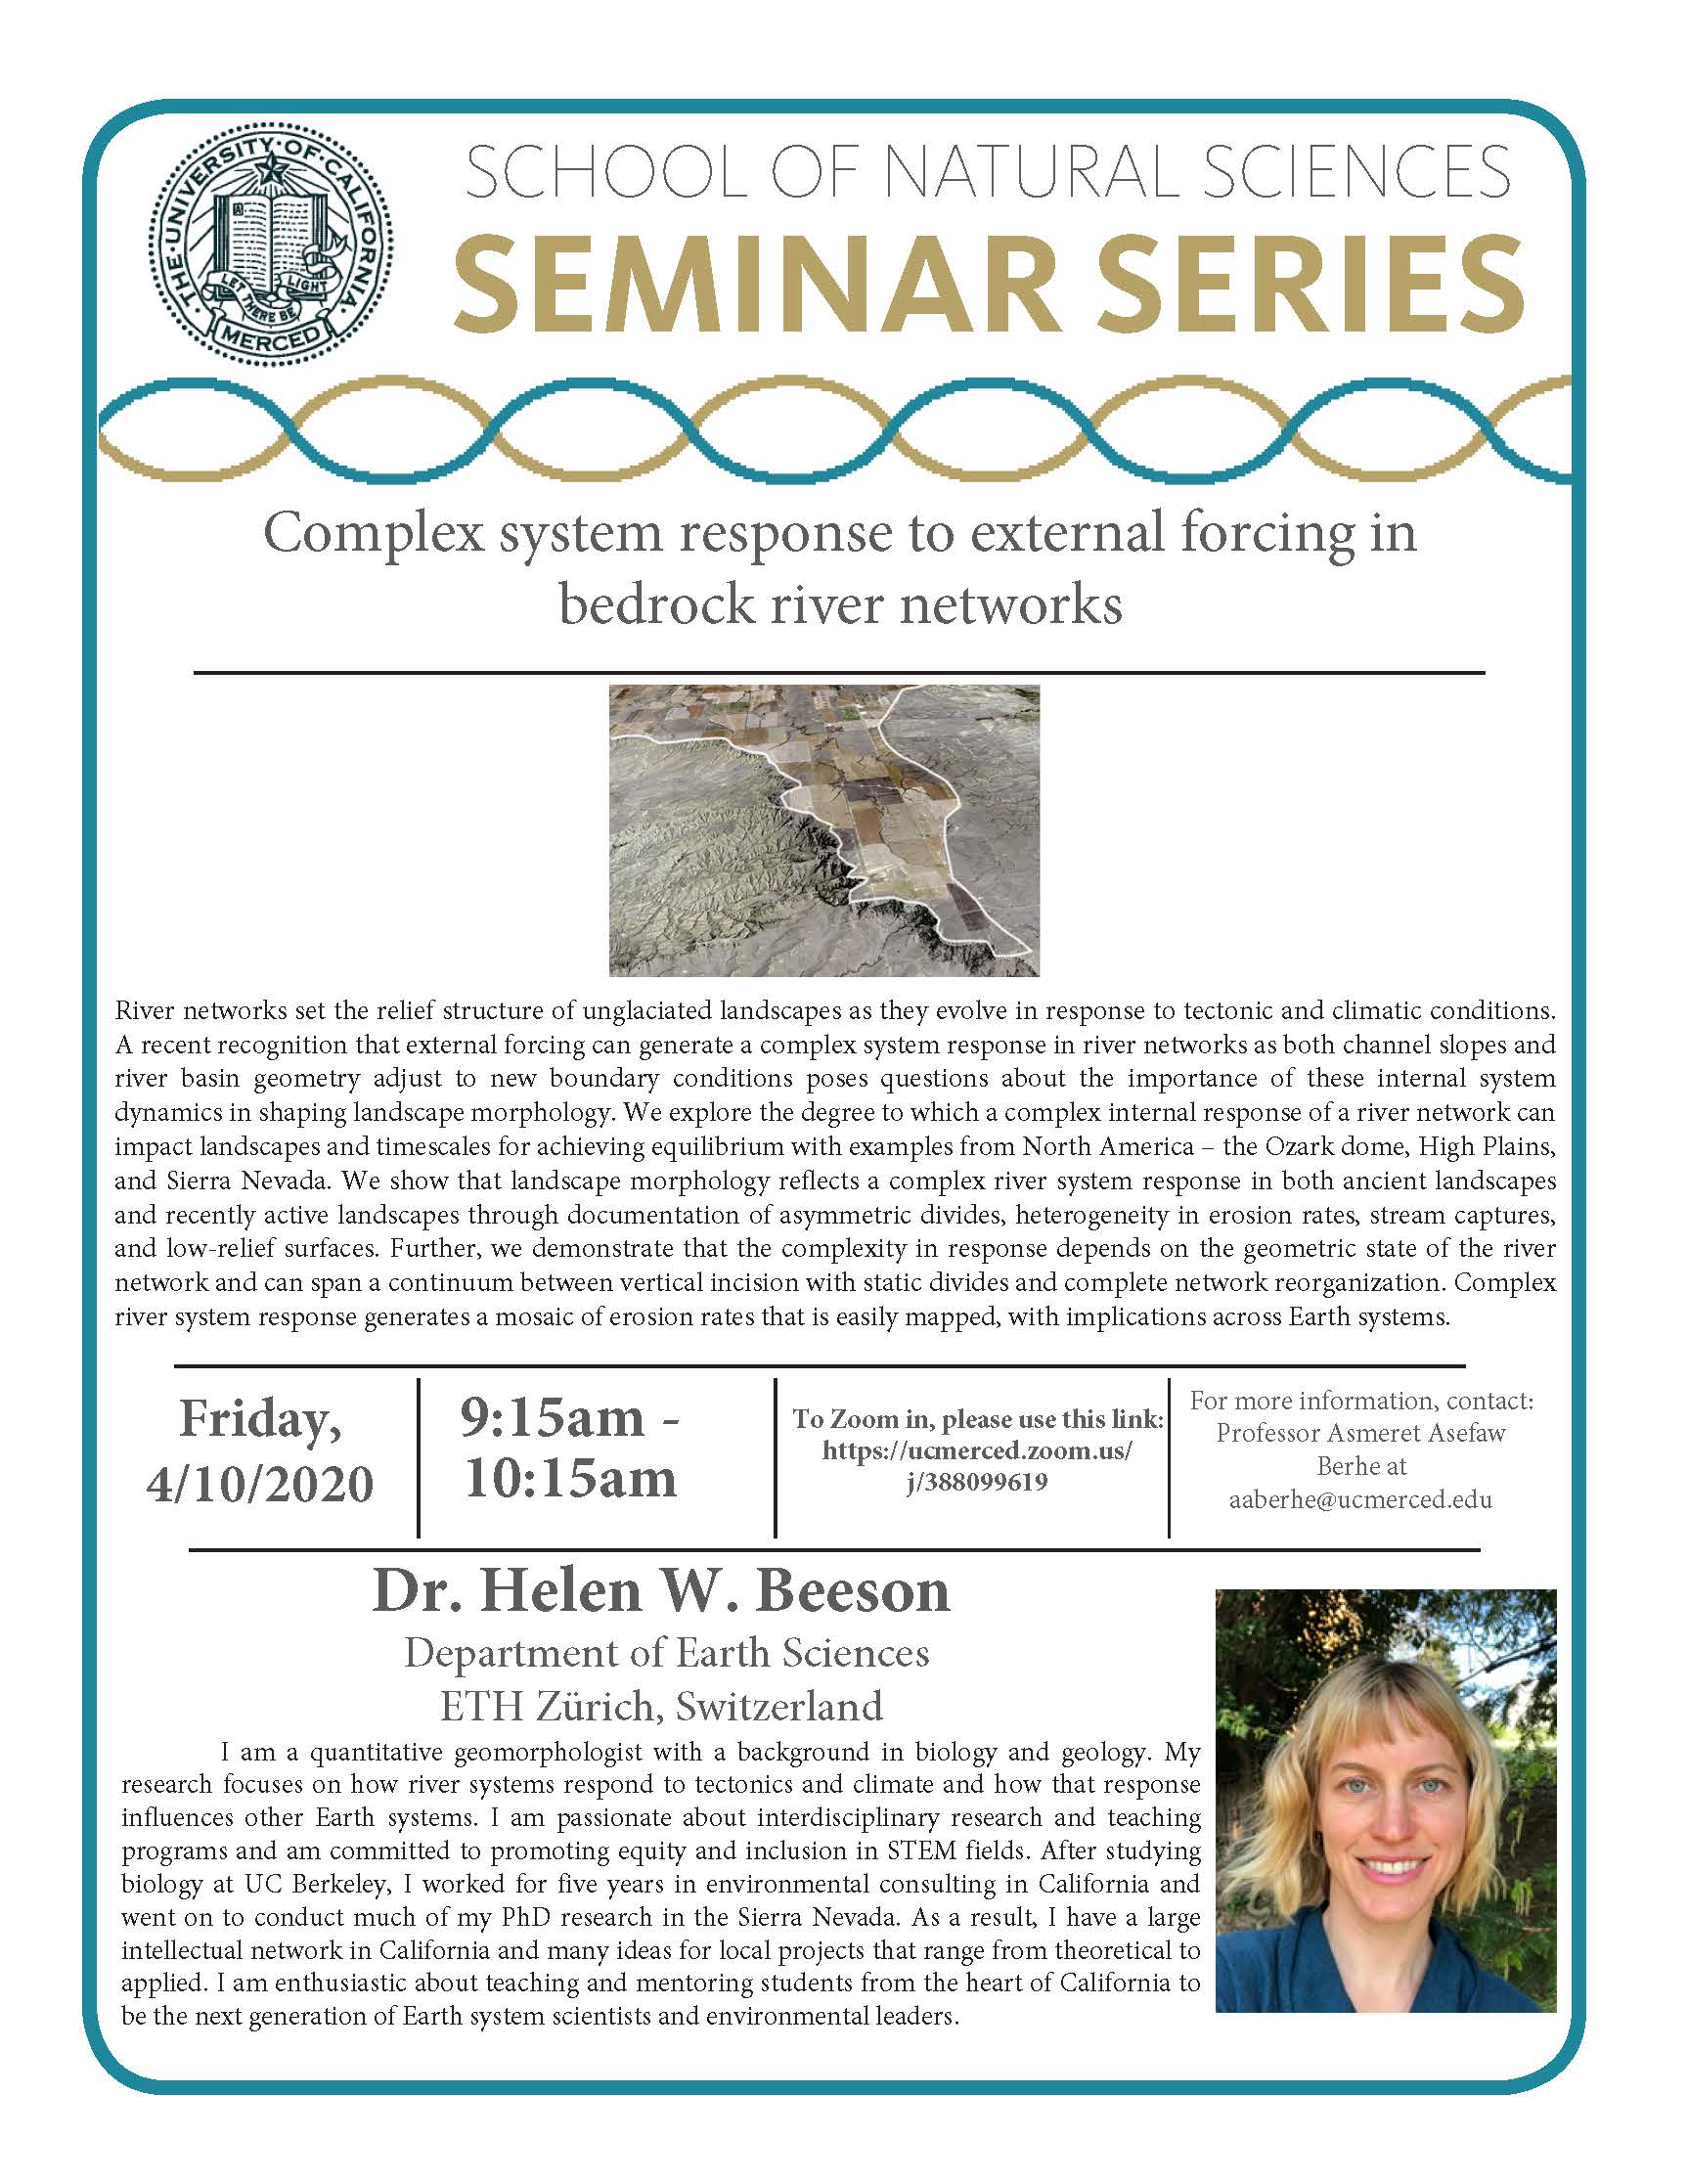 LES Seminar for Dr. Helen Beeson